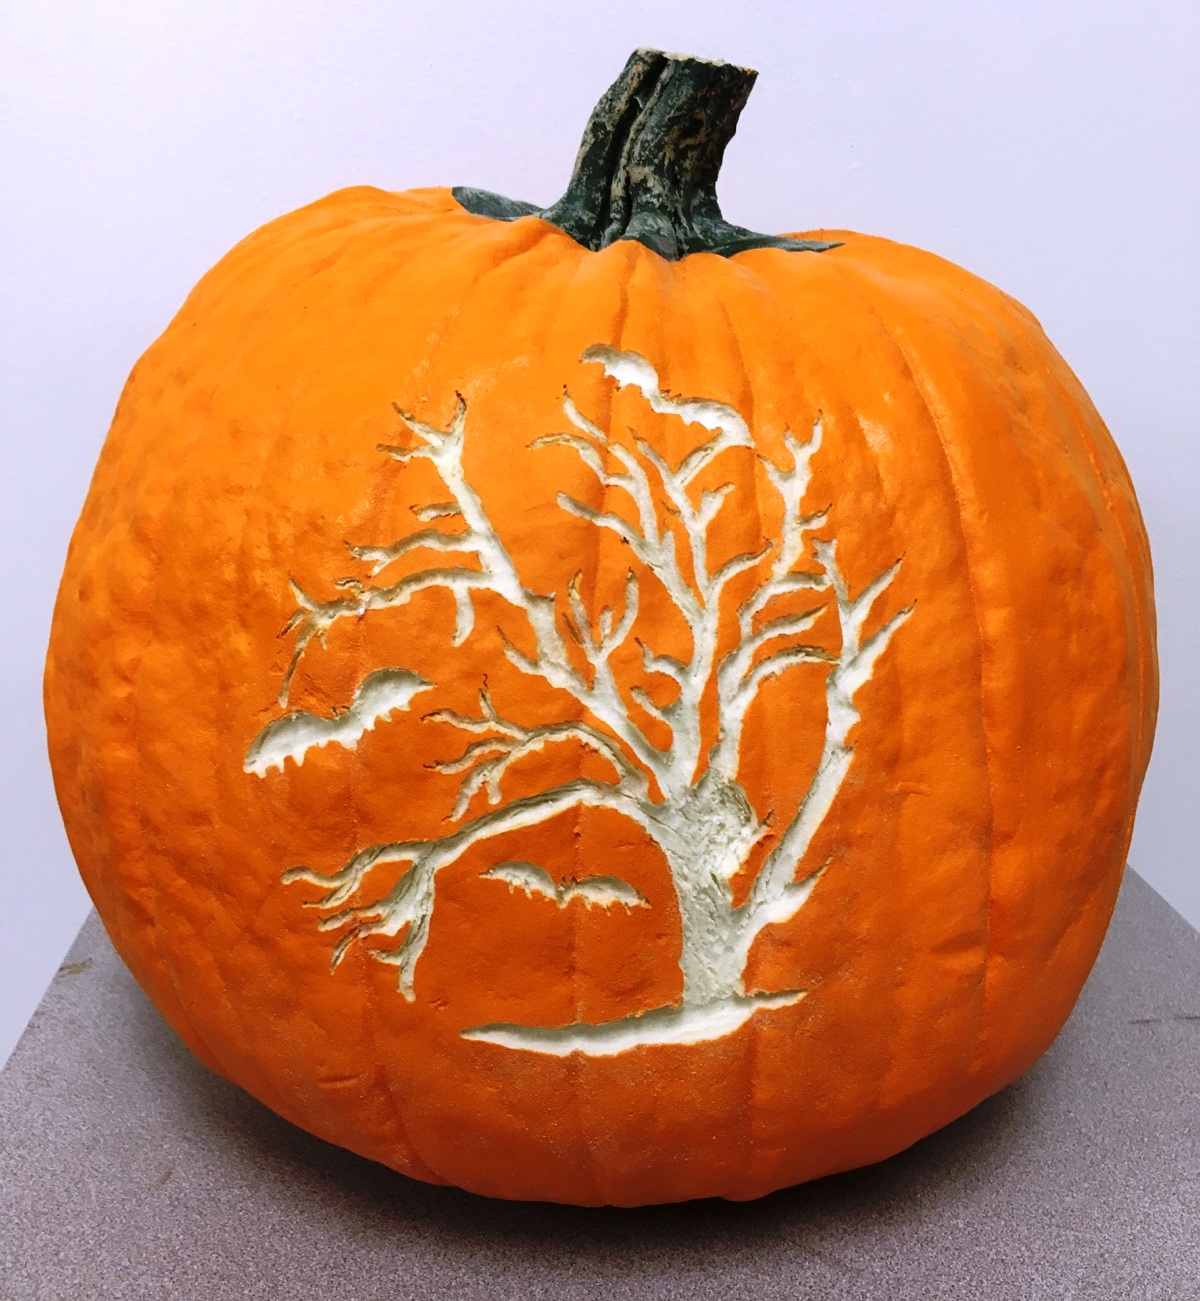 Custom Engraved Pumpkins and Fall Displays!